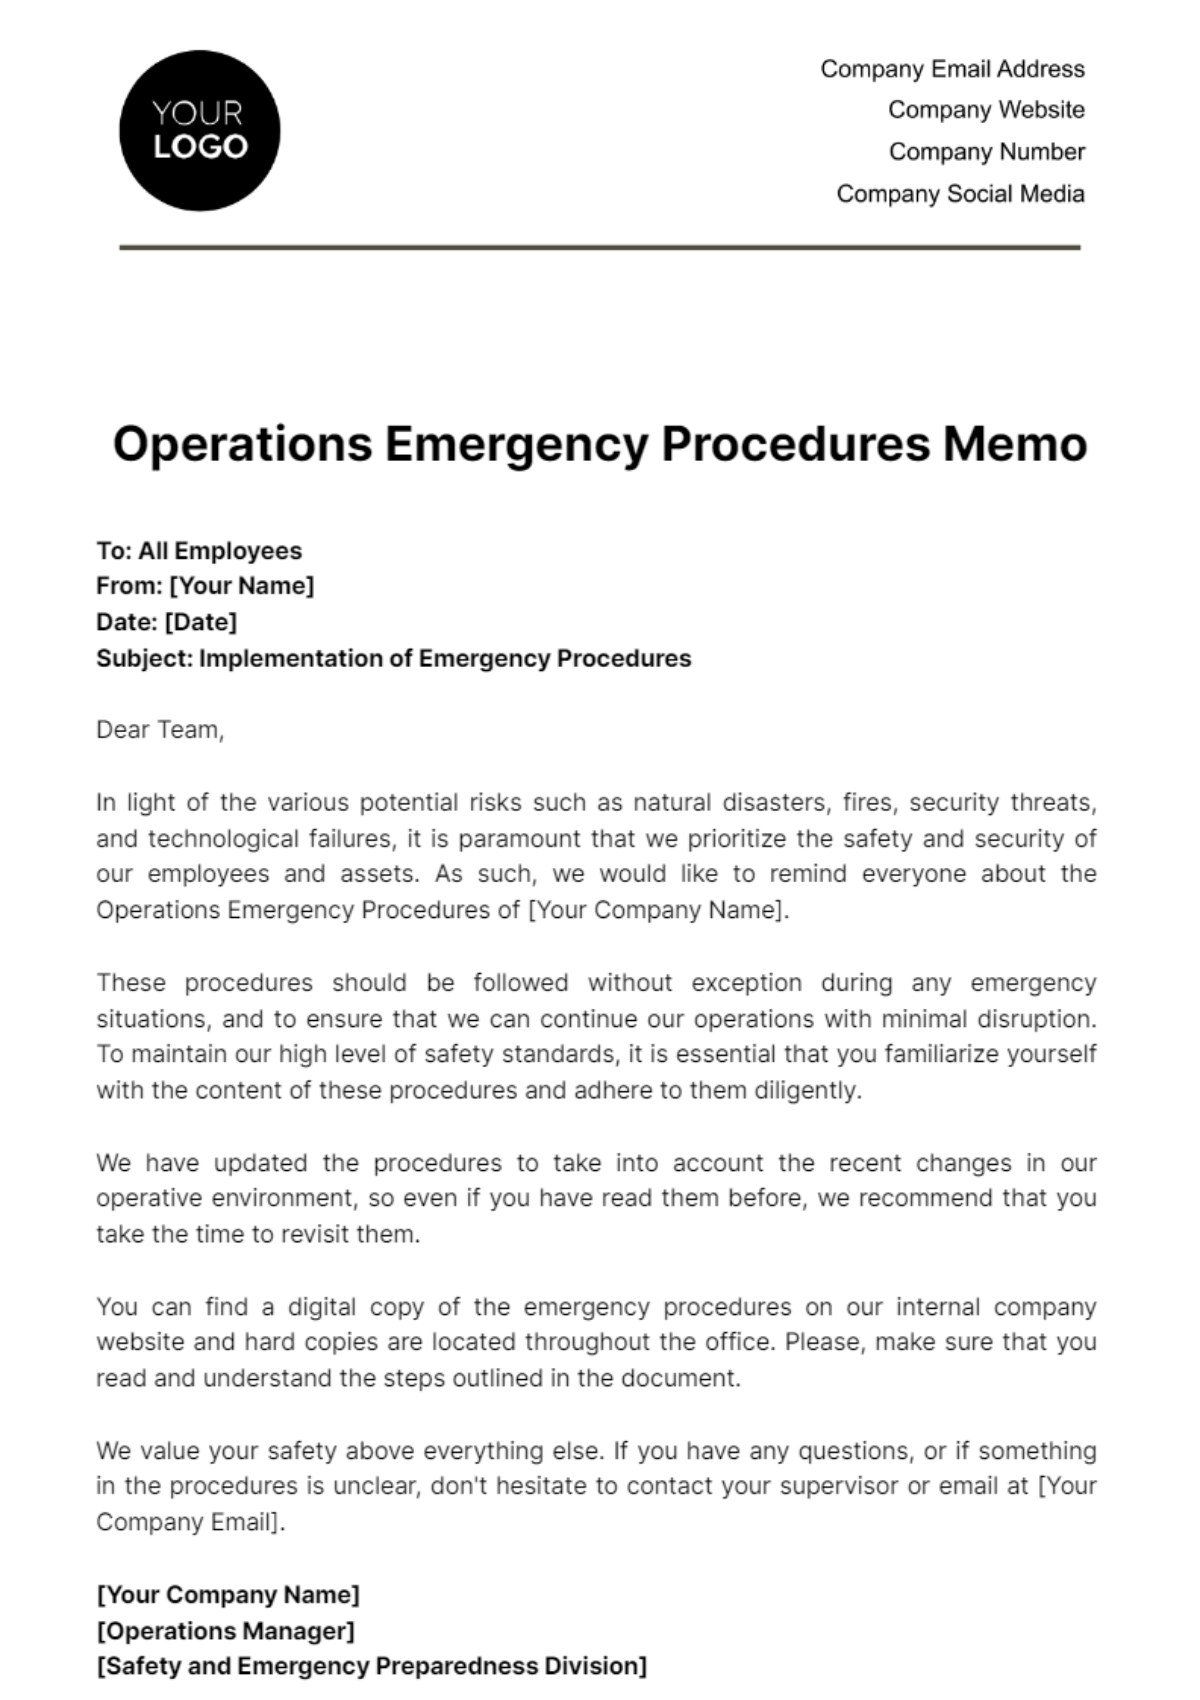 Free Operations Emergency Procedures Memo Template